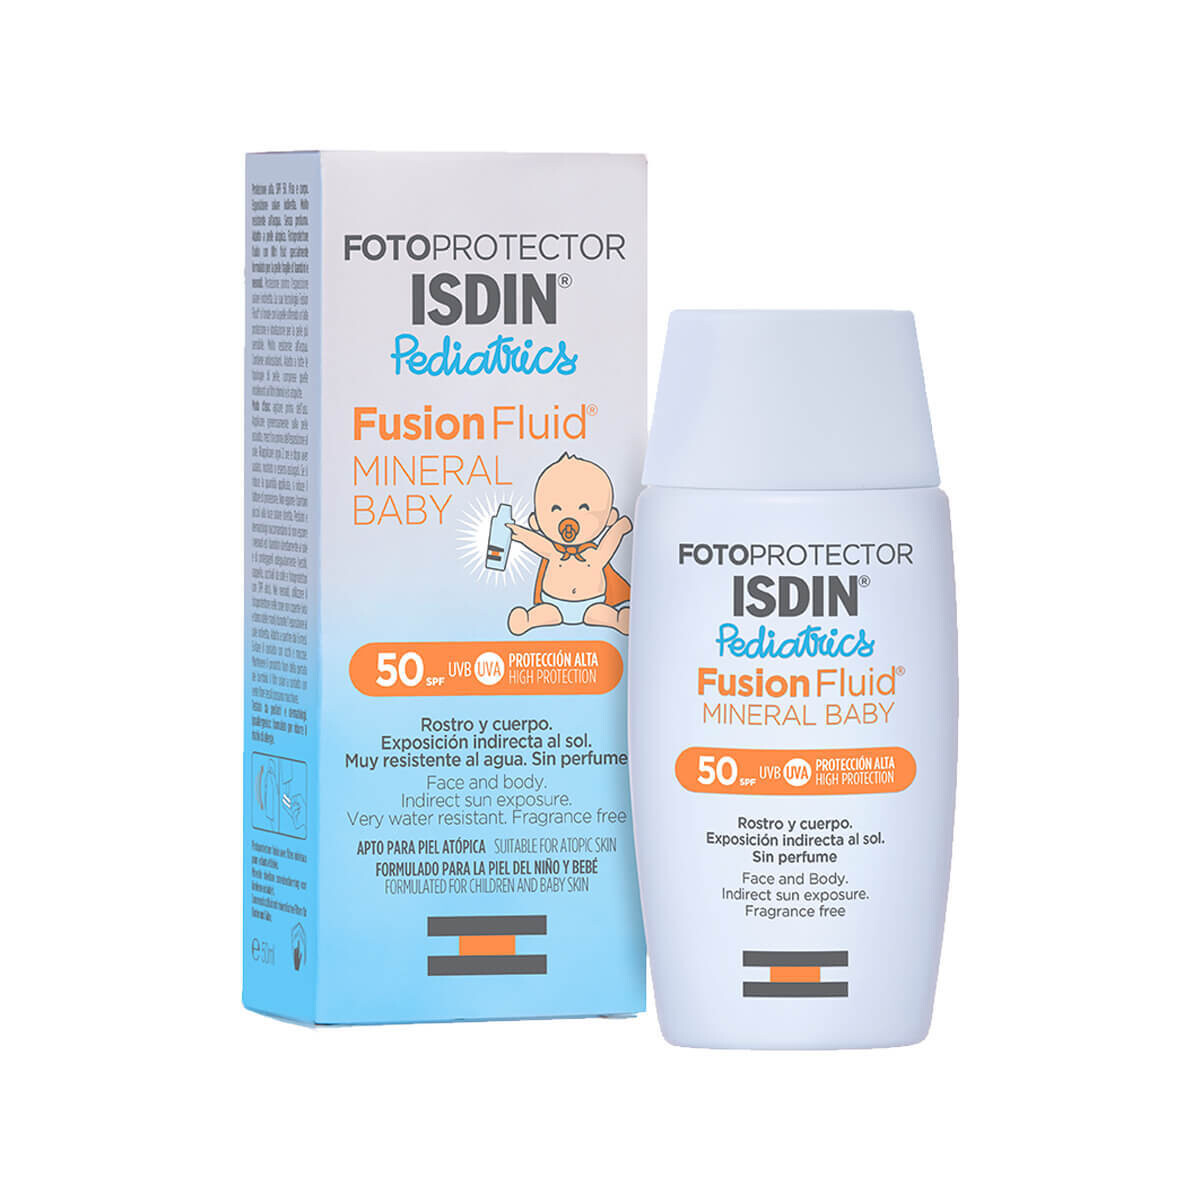 Fotoprotector ISDIN Fusion Fluid Mineral Baby Pediatrics SPF50 50ml | ISDIN  | Tienda Online SkinPharma